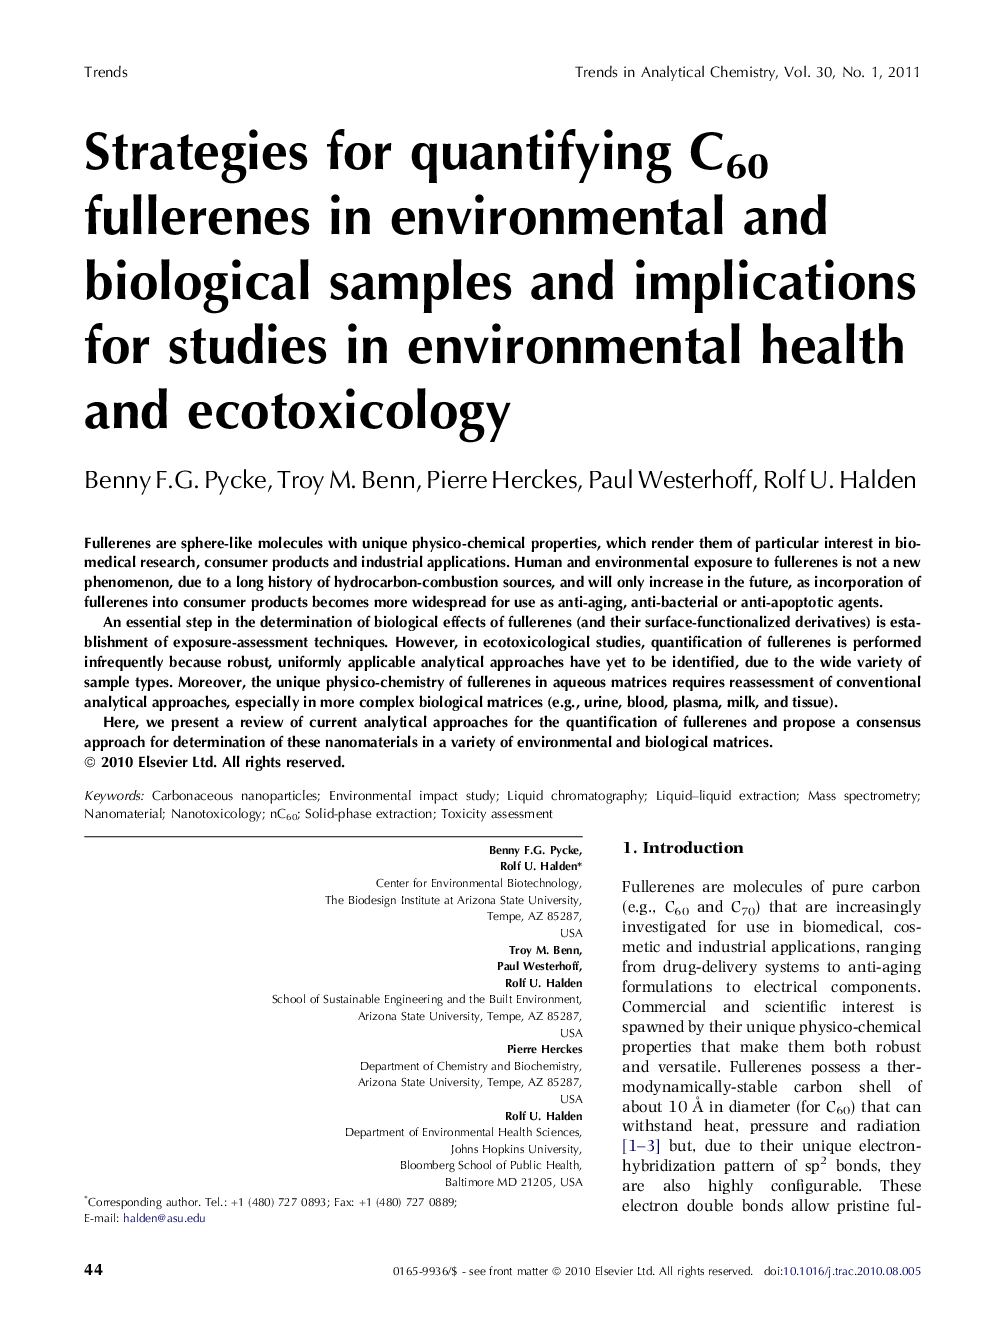 Strategies for quantifying C60 fullerenes in environmental and biological samples and implications for studies in environmental health and ecotoxicology